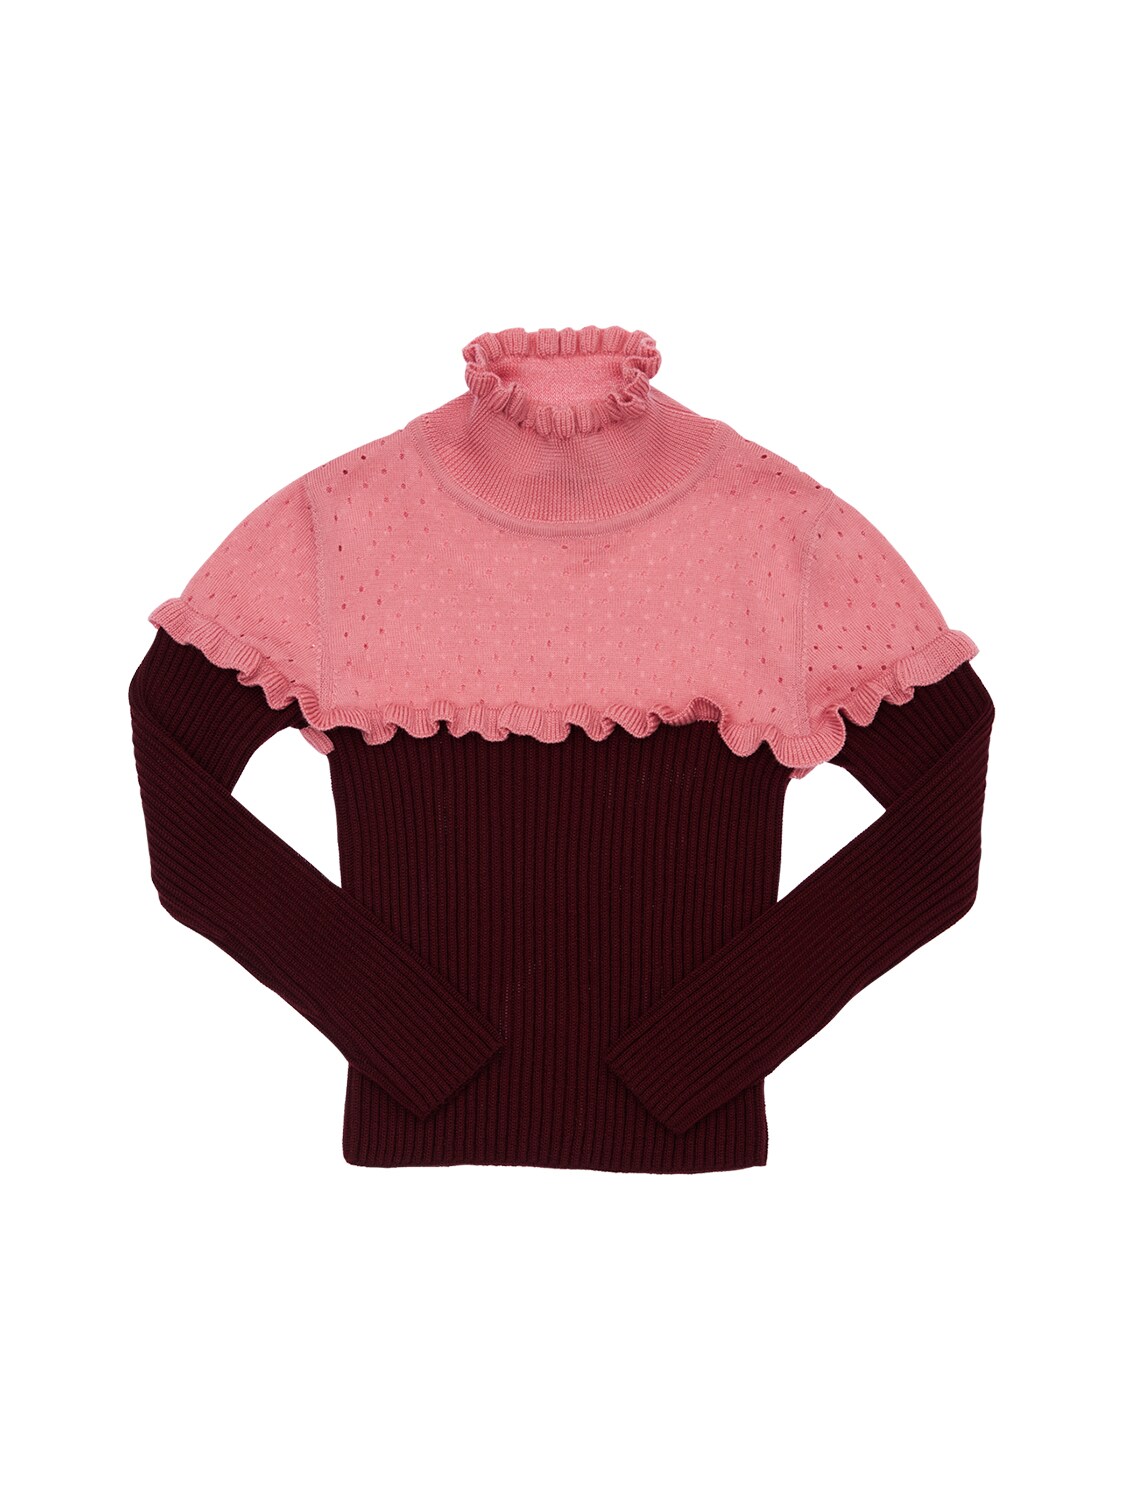 Luisaviaroma Girls Clothing Sweaters Turtlenecks Wool Blend Knit Turtleneck Sweater 